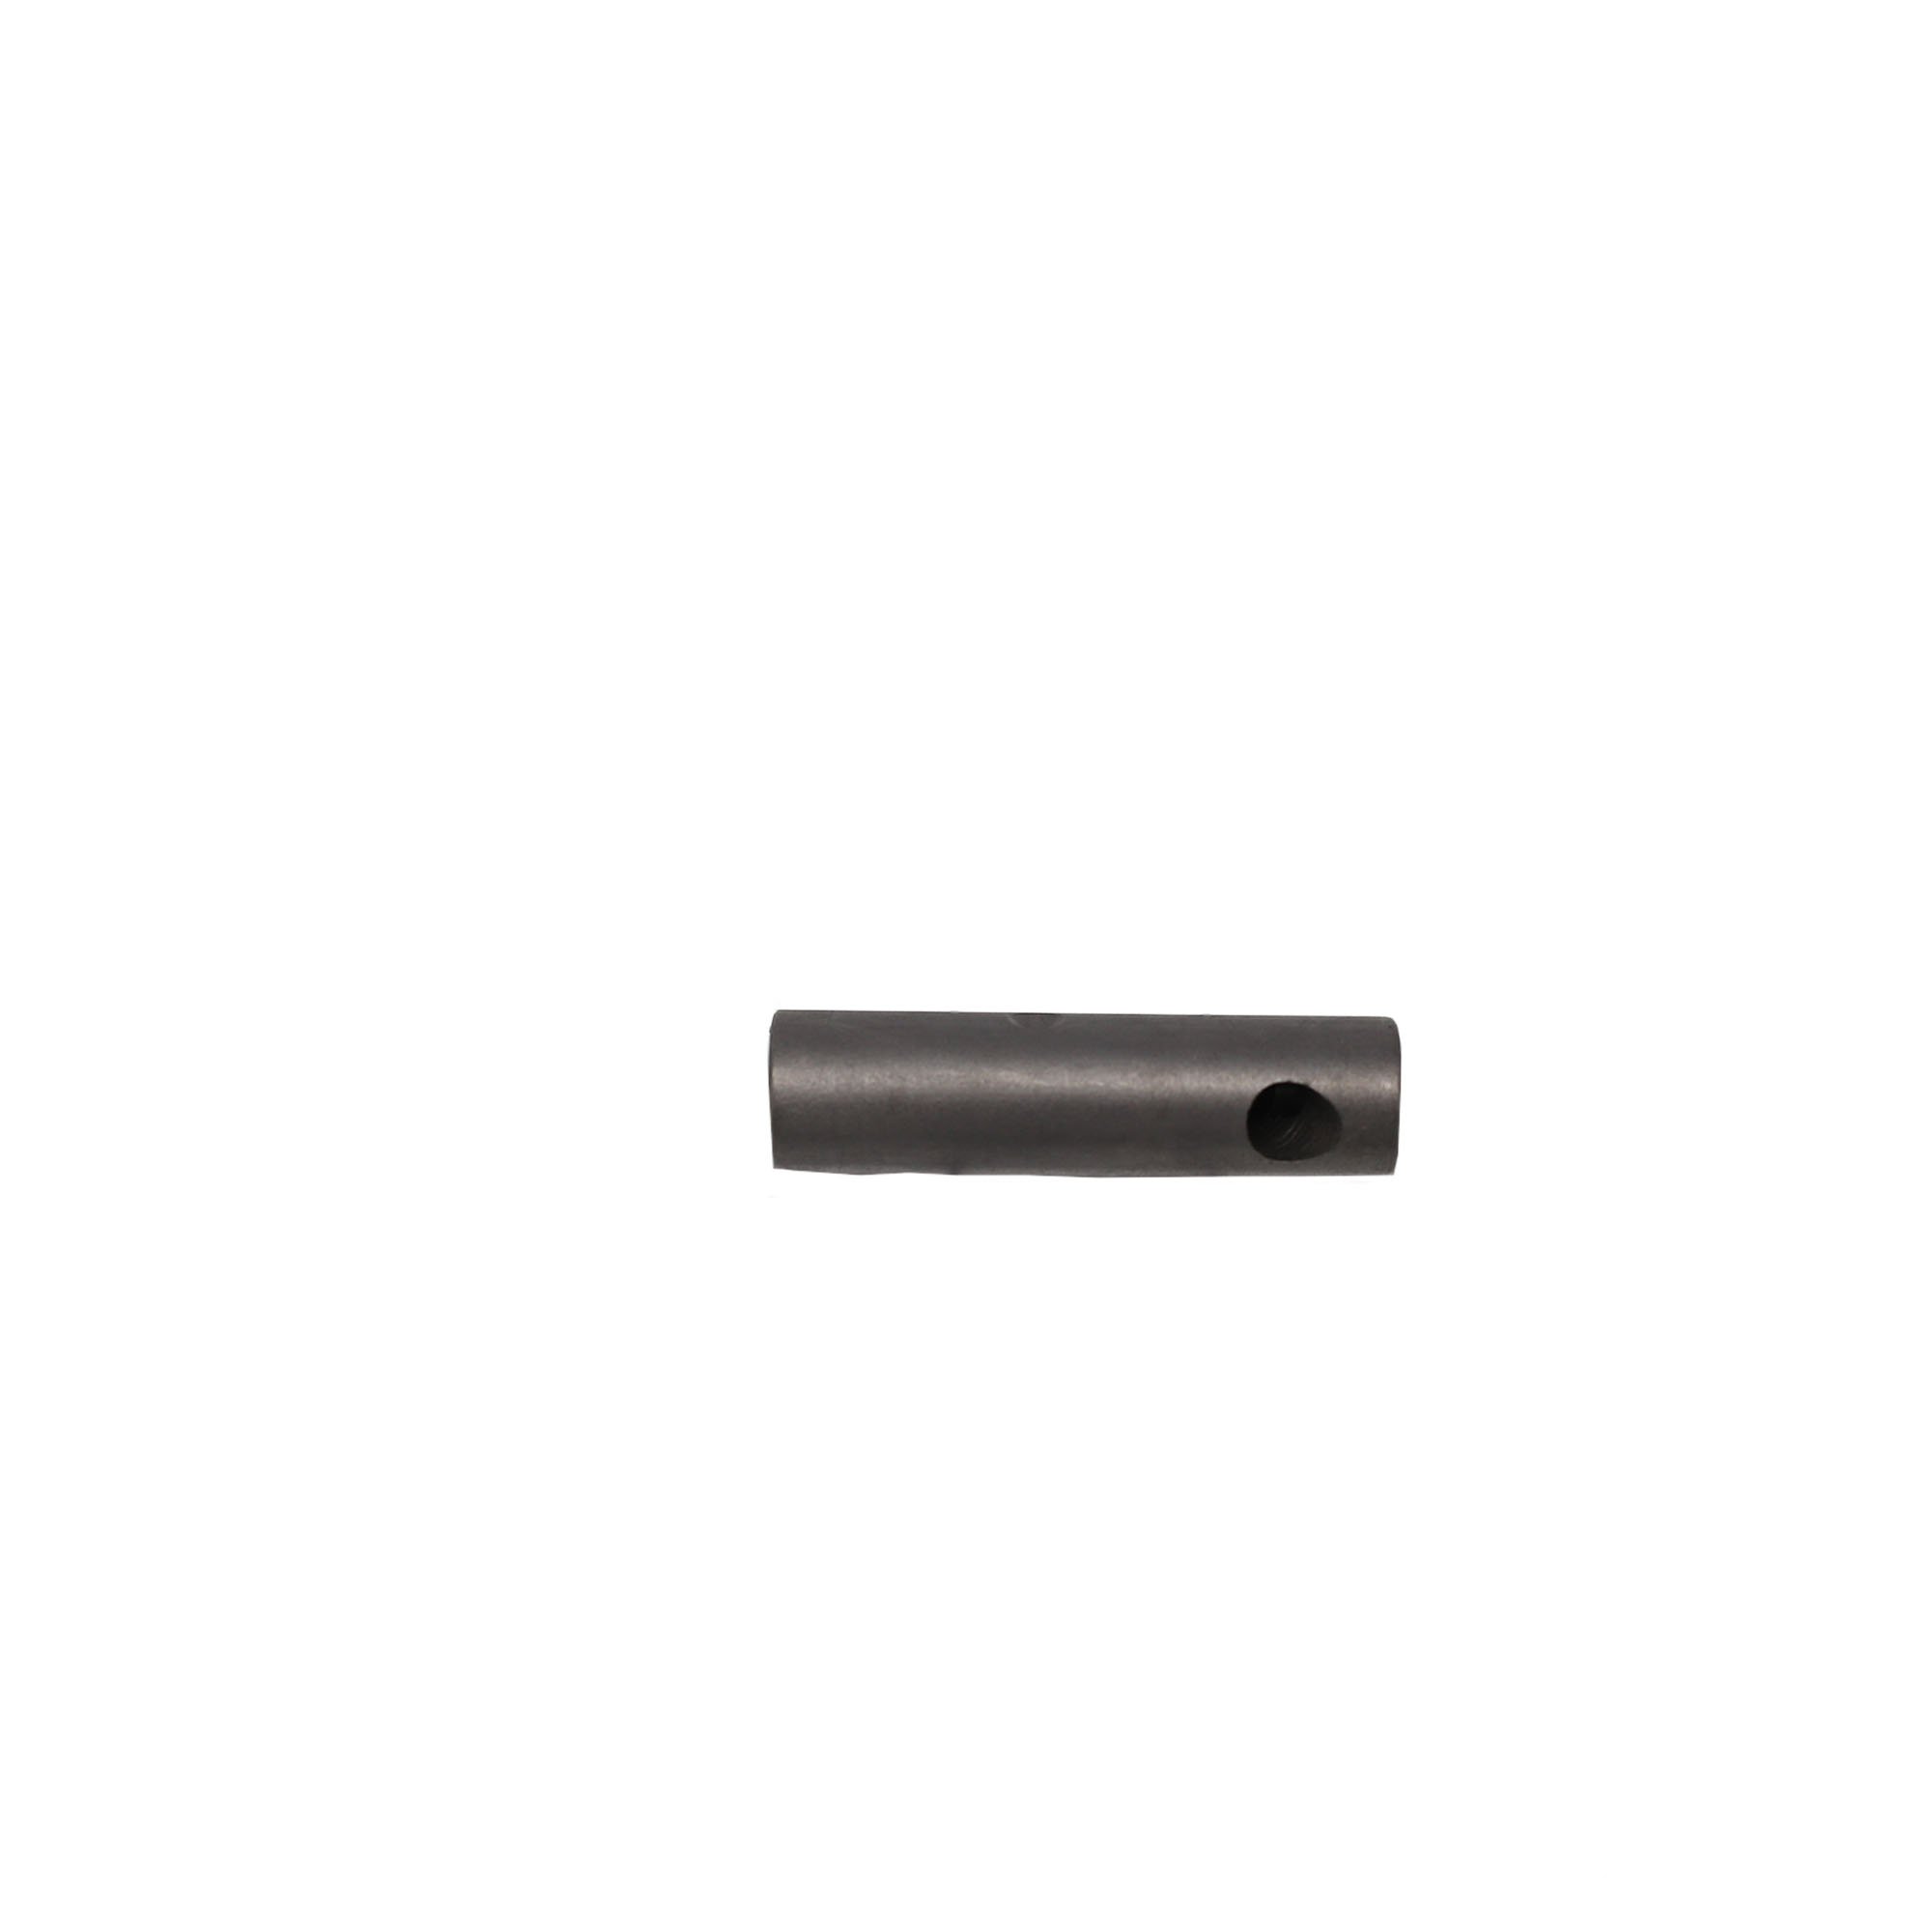 Sandblast Guns & Nozzles, Parts & Accessories, 5/16″ Steel Combo Nozzle for Handheld AHPB1 Gun, 10115 Combo Nozzle, American Hawk Industrial, Dee-Blast